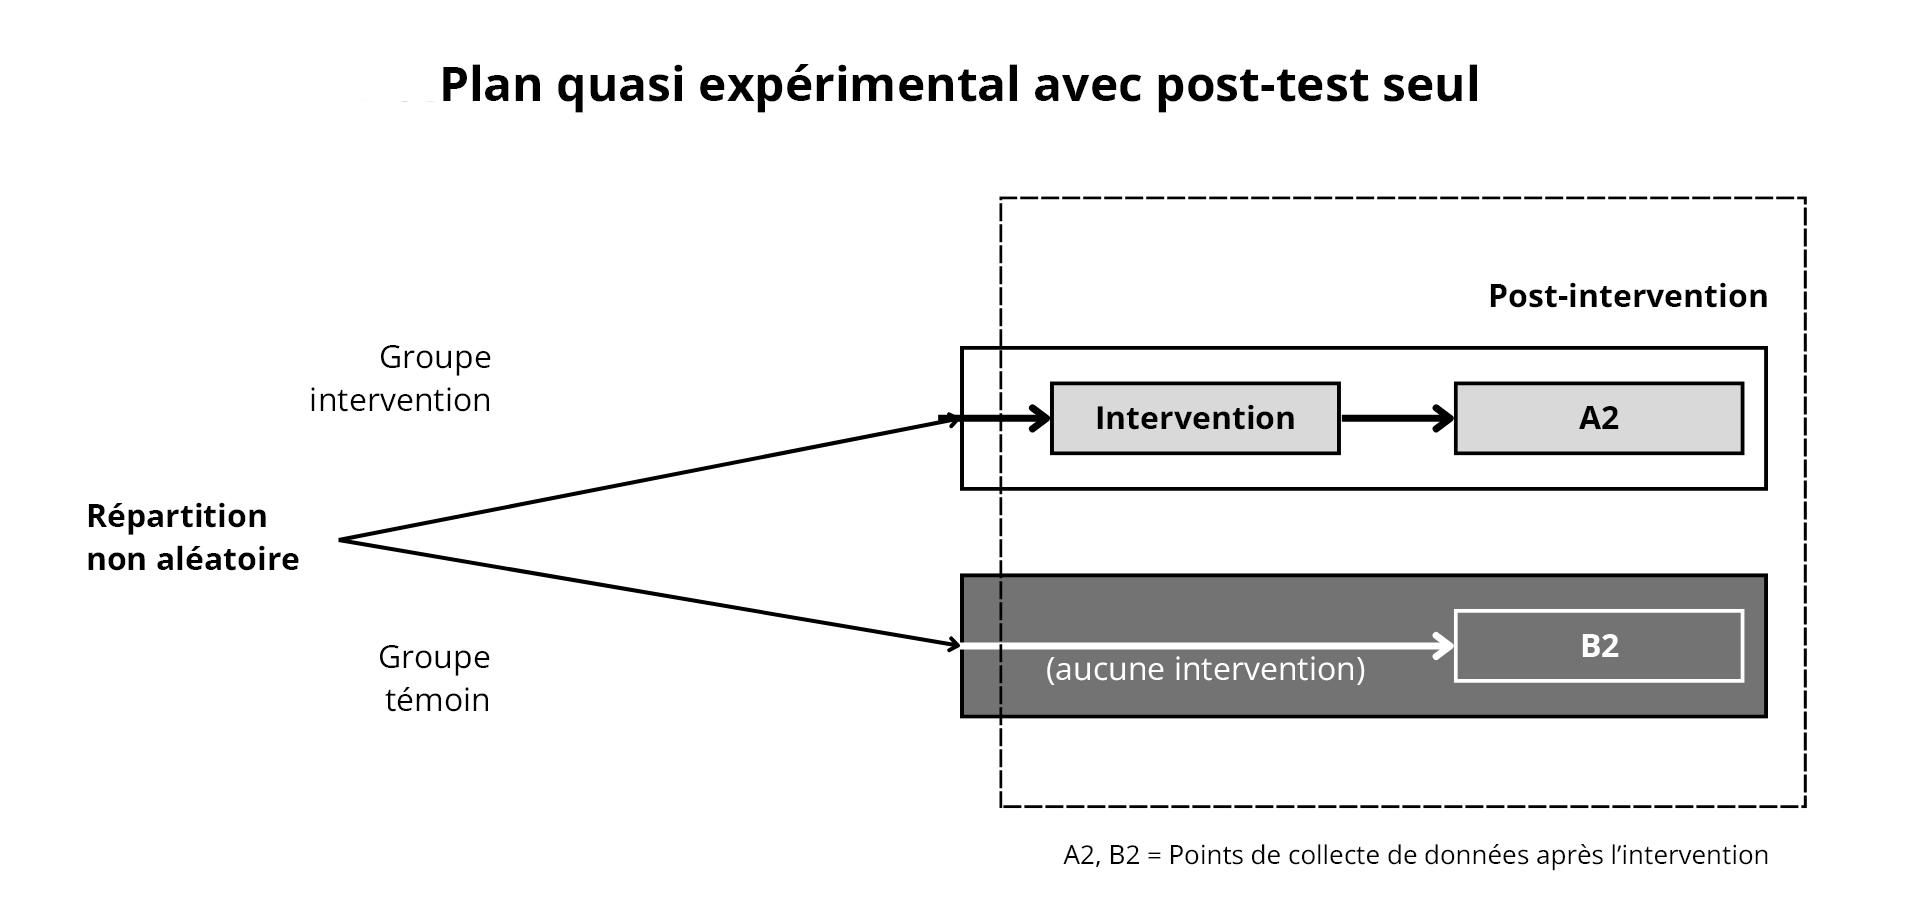 Figure 6. Plan quasi expérimental avec post-test seul. Adaptation de https://www.k4health.org/toolkits/measuring-success/types-evaluation-designs